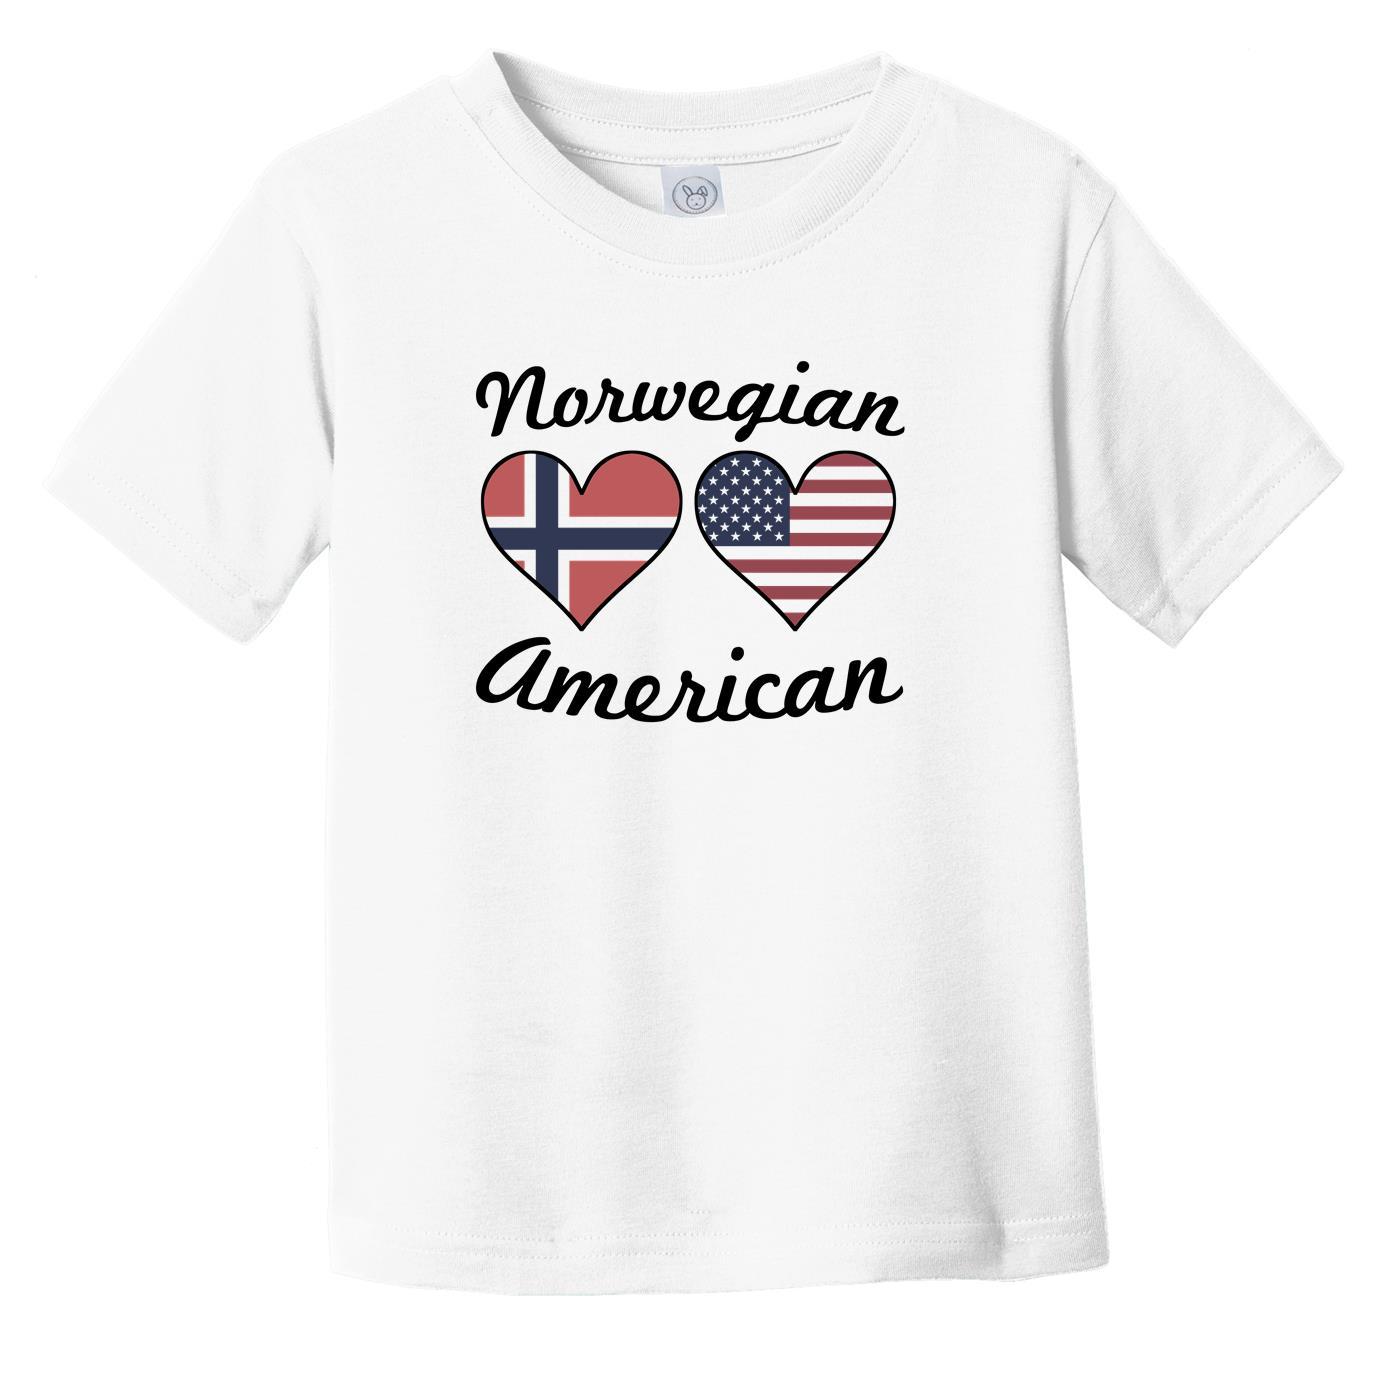 Norwegian American Flag Hearts Infant Toddler T-Shirt